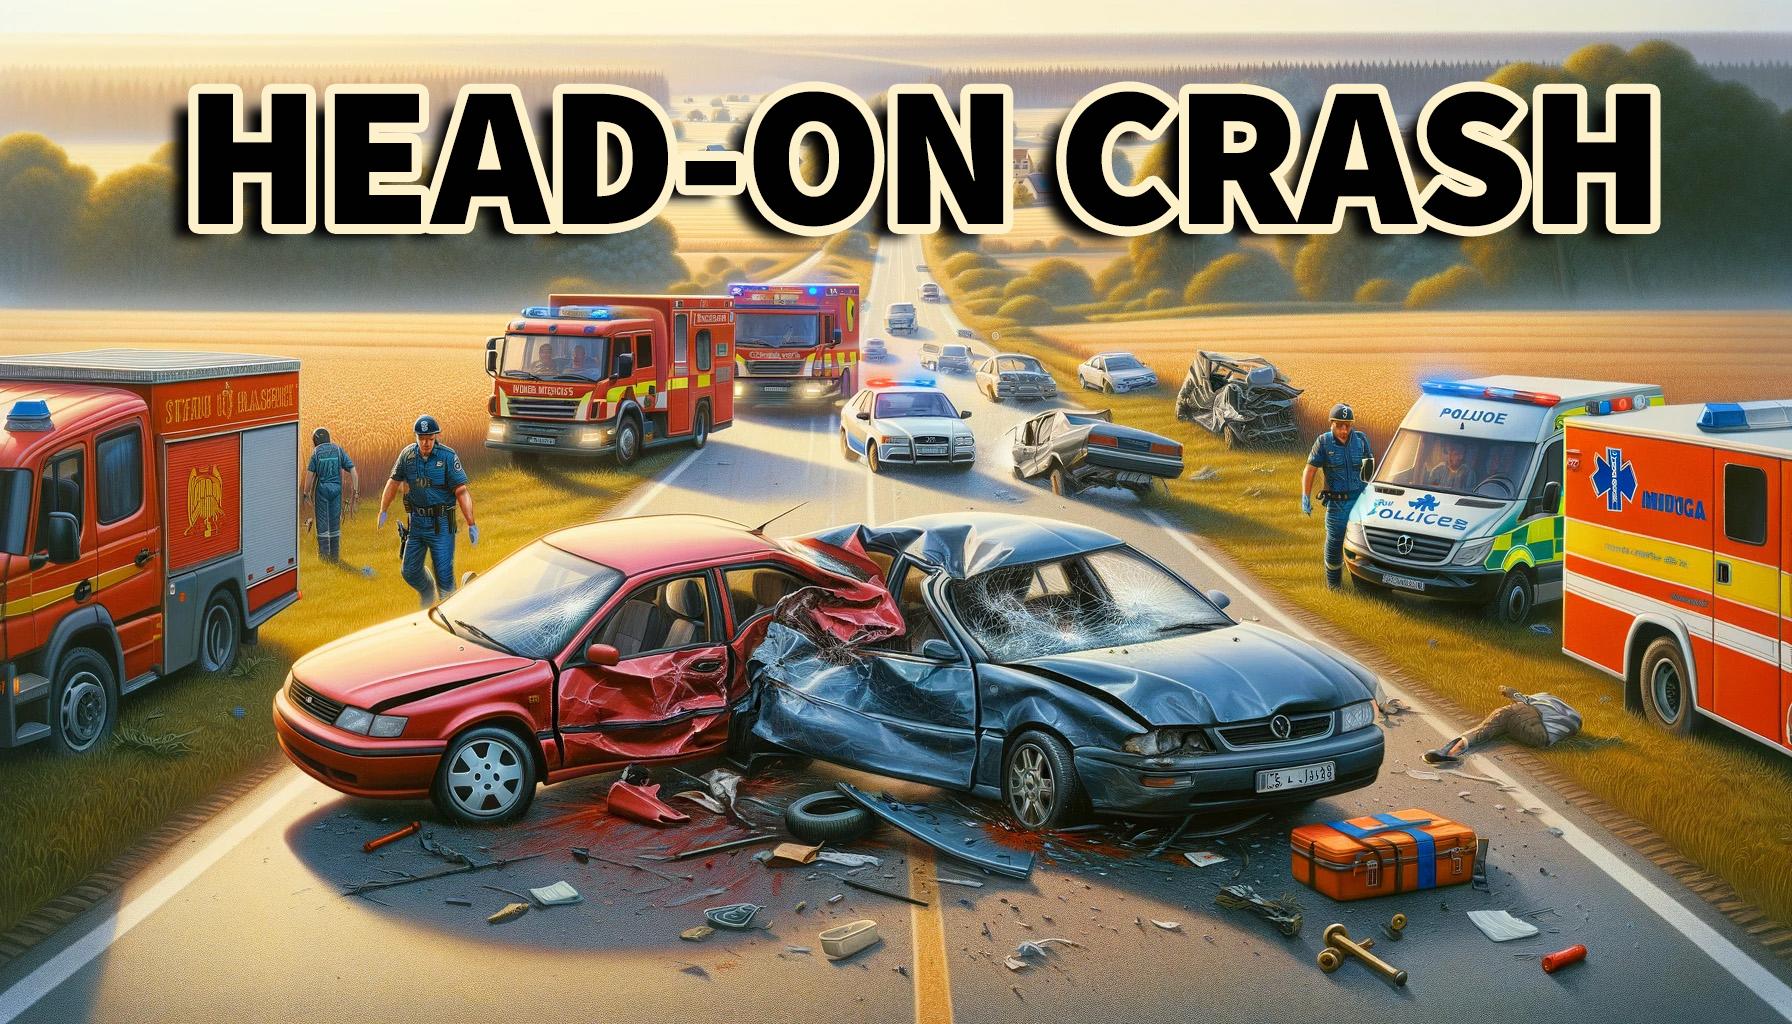 Head on crash news graphic